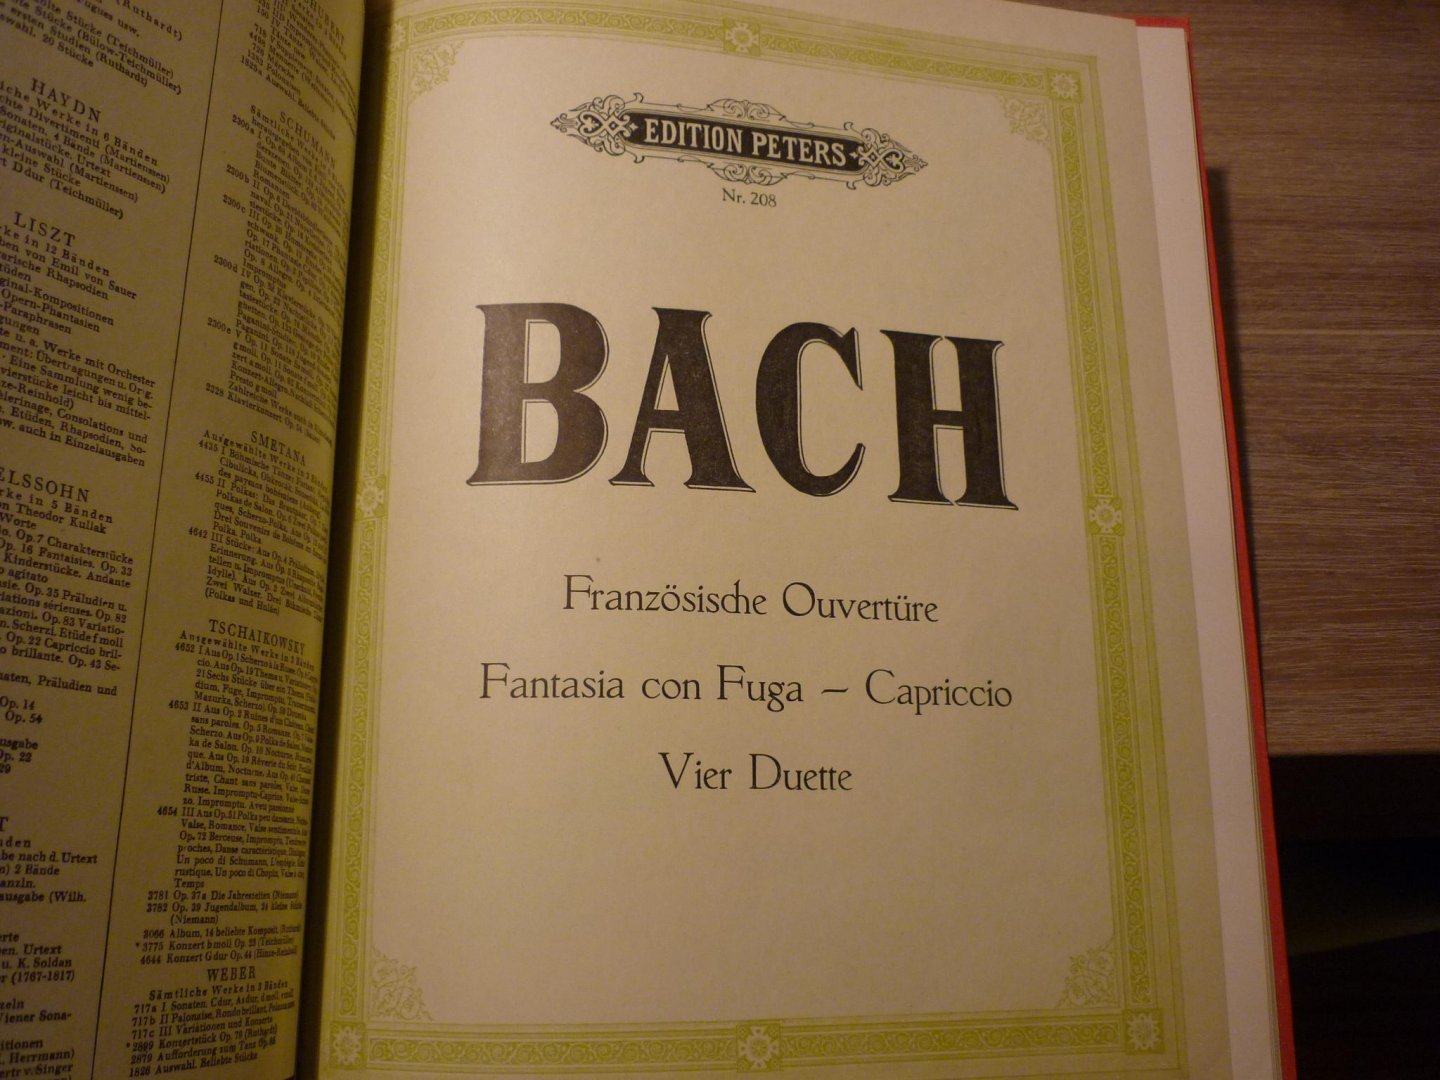 Bach; J. S. (1685-1750) - Italienisches Konzert / Fantasia / Präludium  //  Französische Ouvertüre, Fantasia con fuga, Capriccio, 4 Duette  //  , Aria variata; Toccata; Ouverture  //